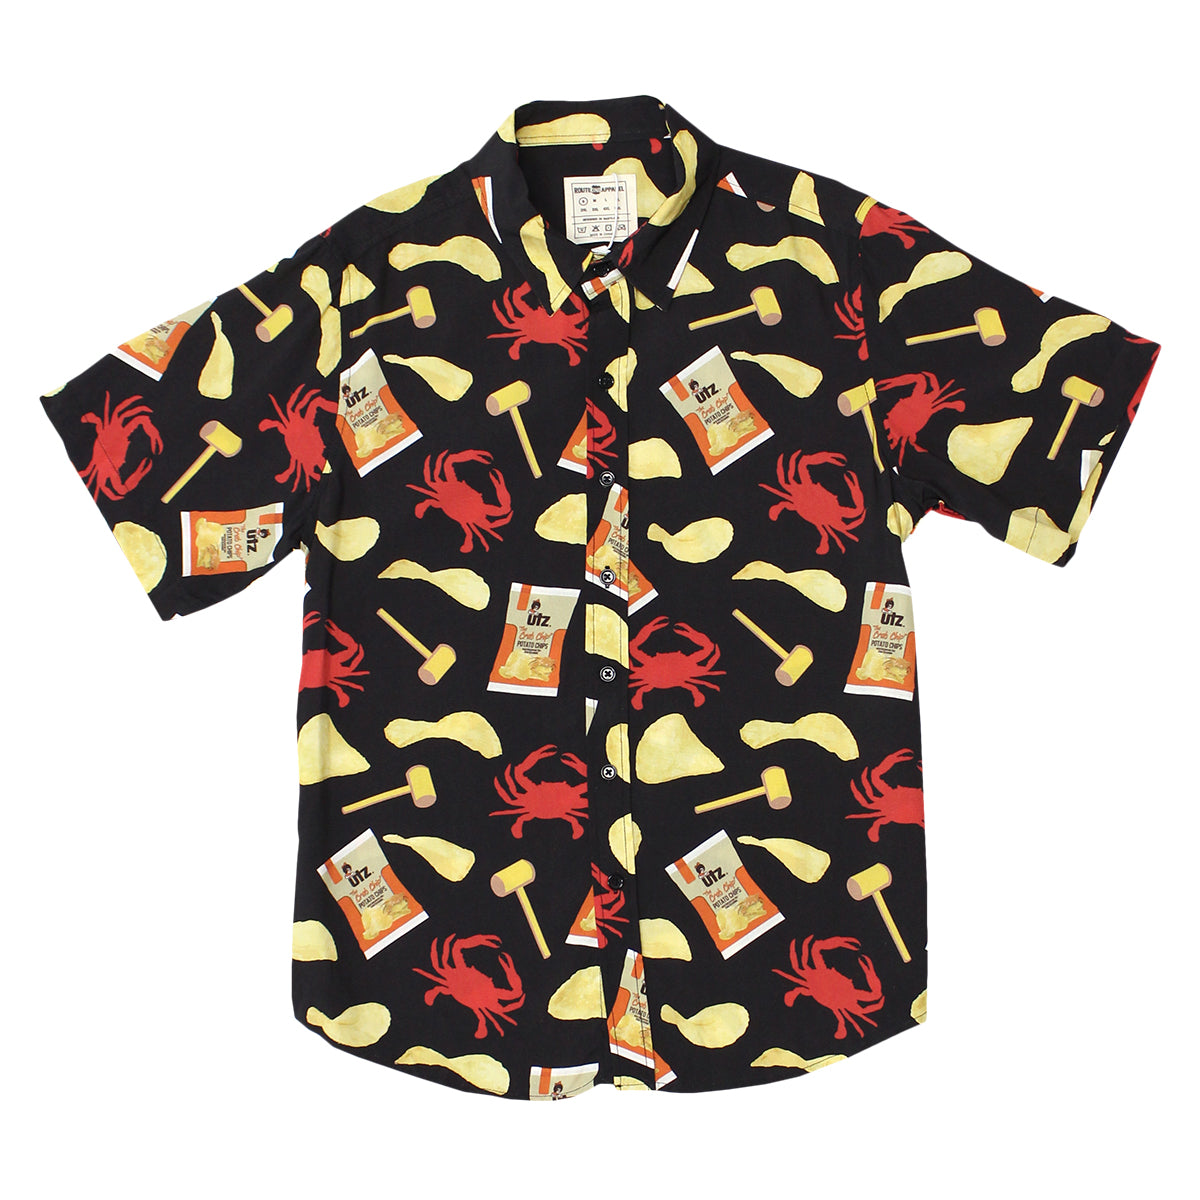 Utz Crab Chips, Mallets, & Crabs (Black) / Hawaiian Shirt - Route One Apparel